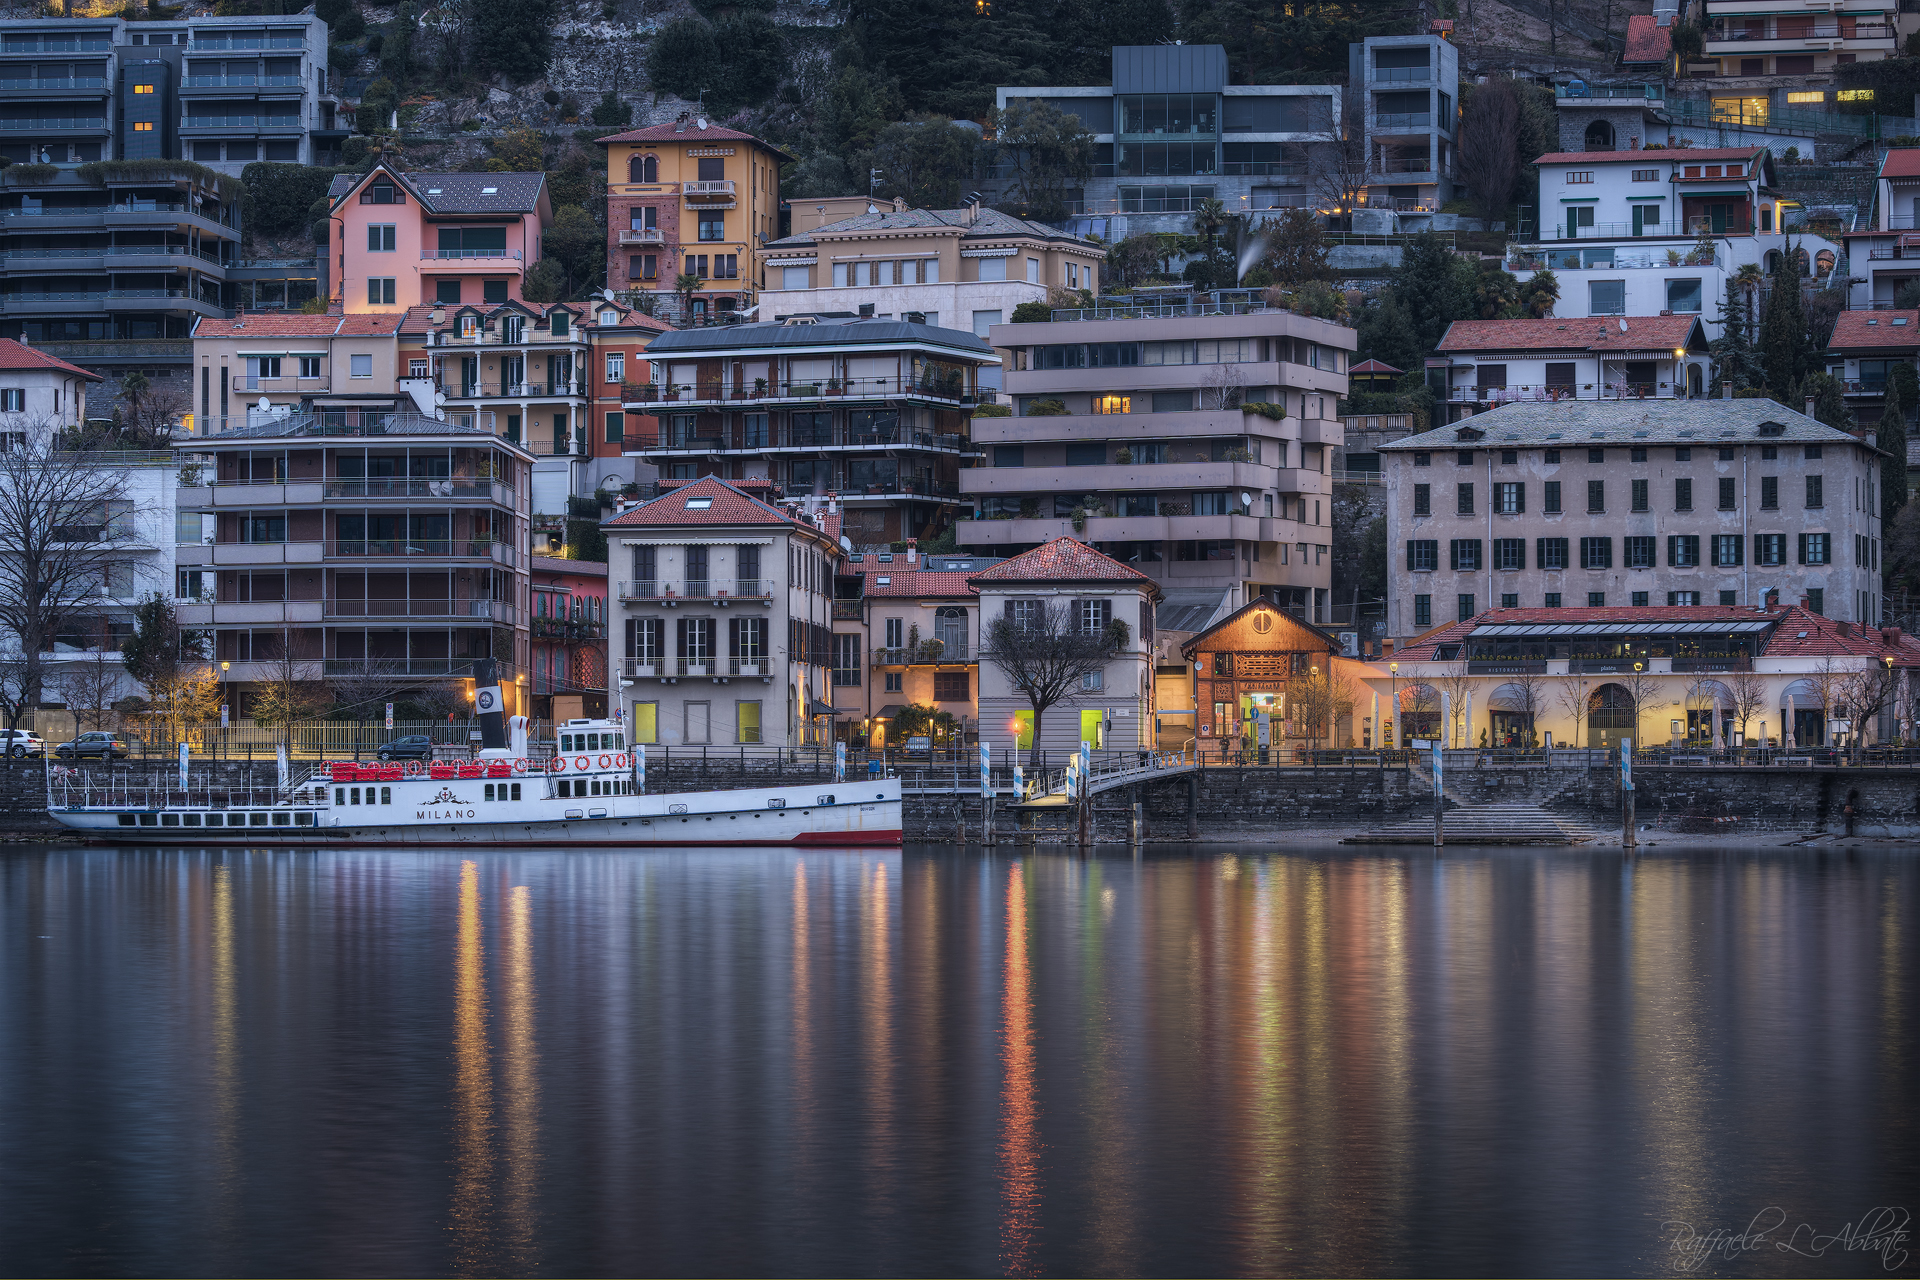 Blue hour on the long Lake Como...